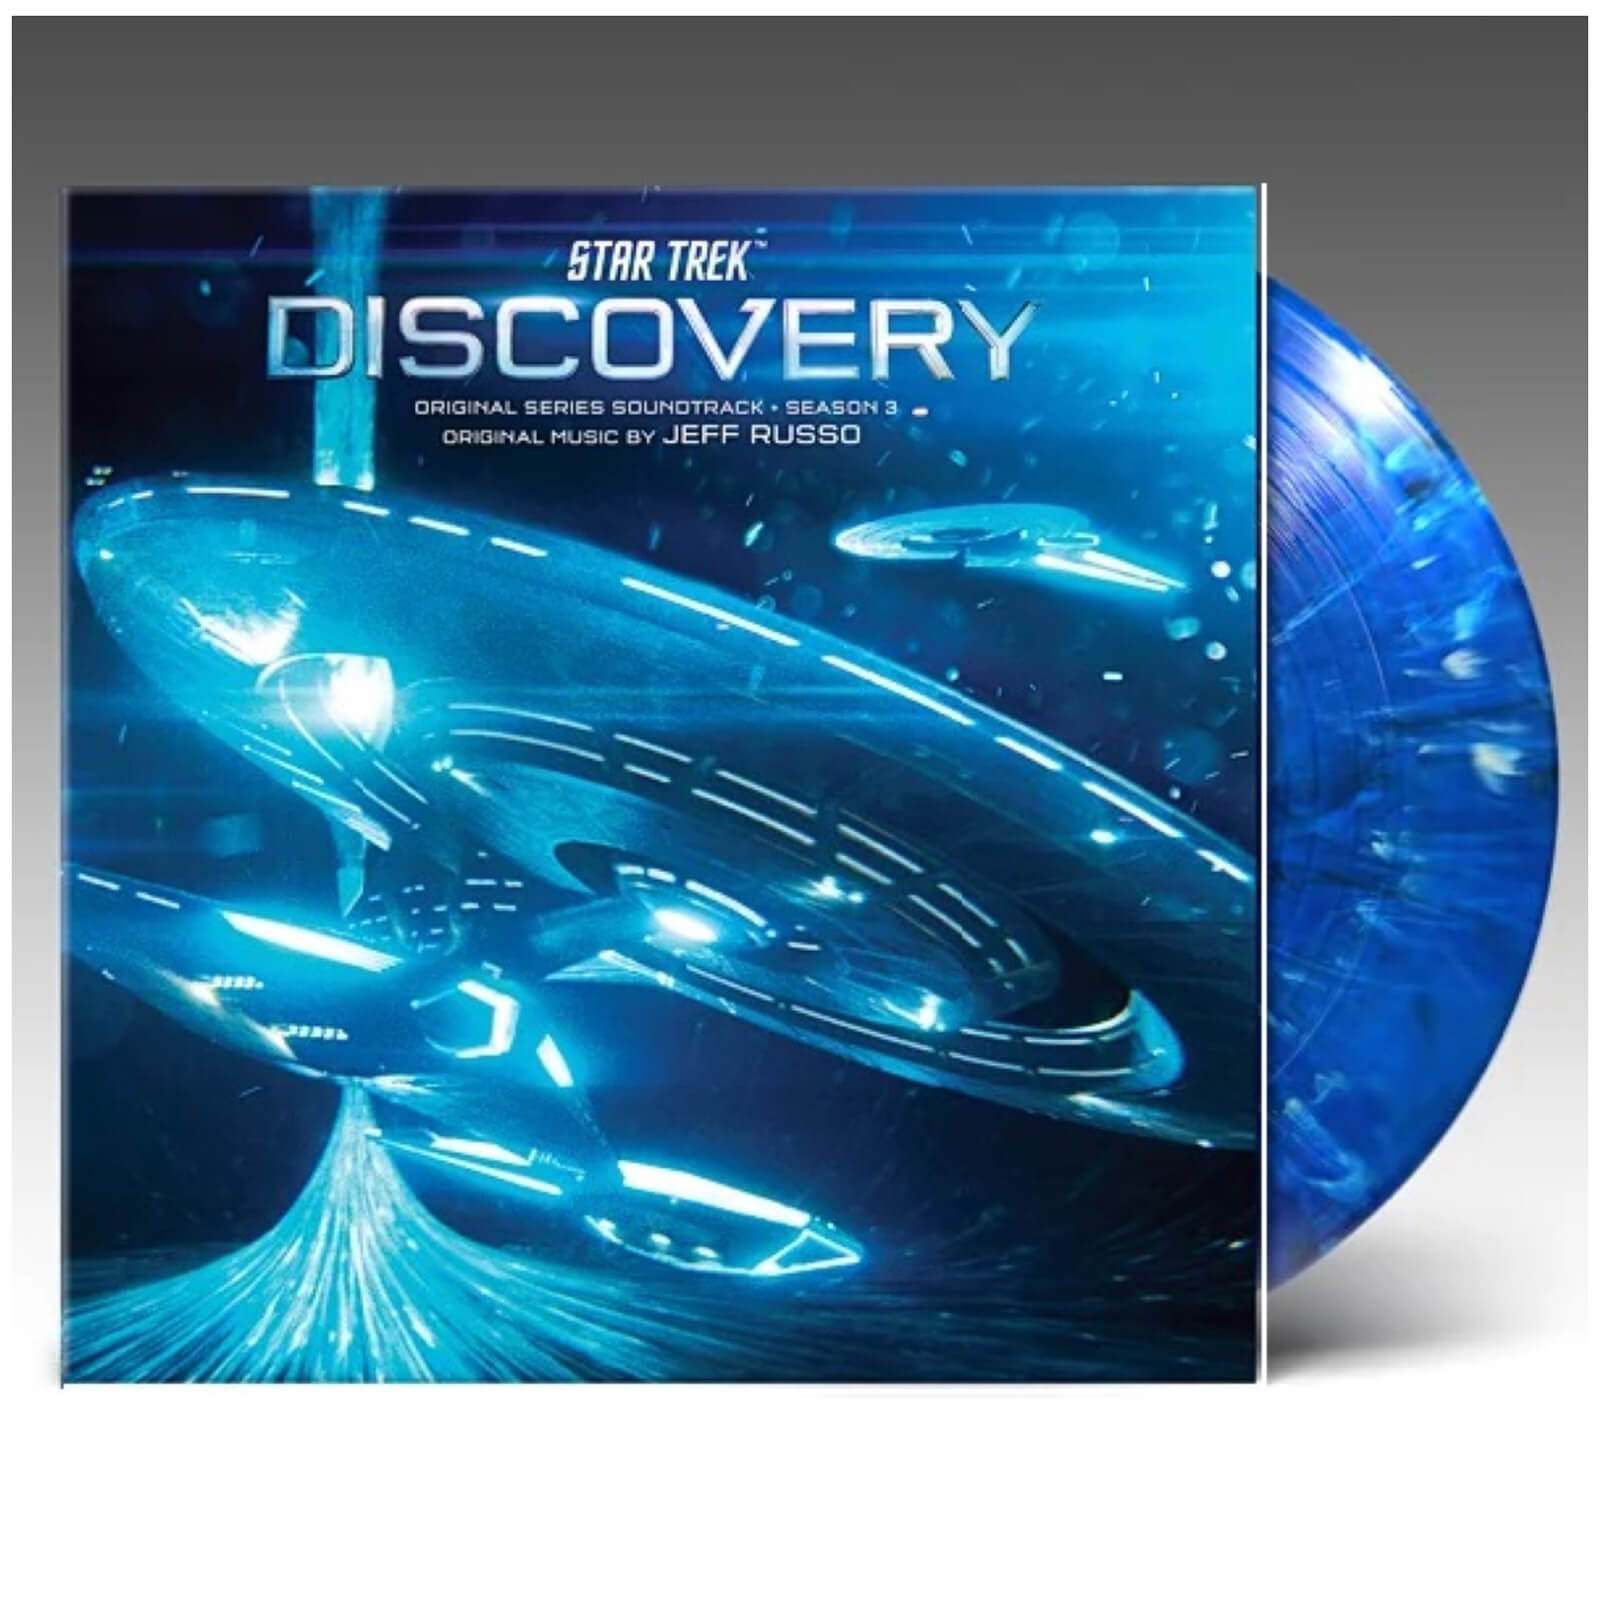 Star Trek: Discovery (Original Series Soundtrack) Season 3 Vinyl (Coloured)